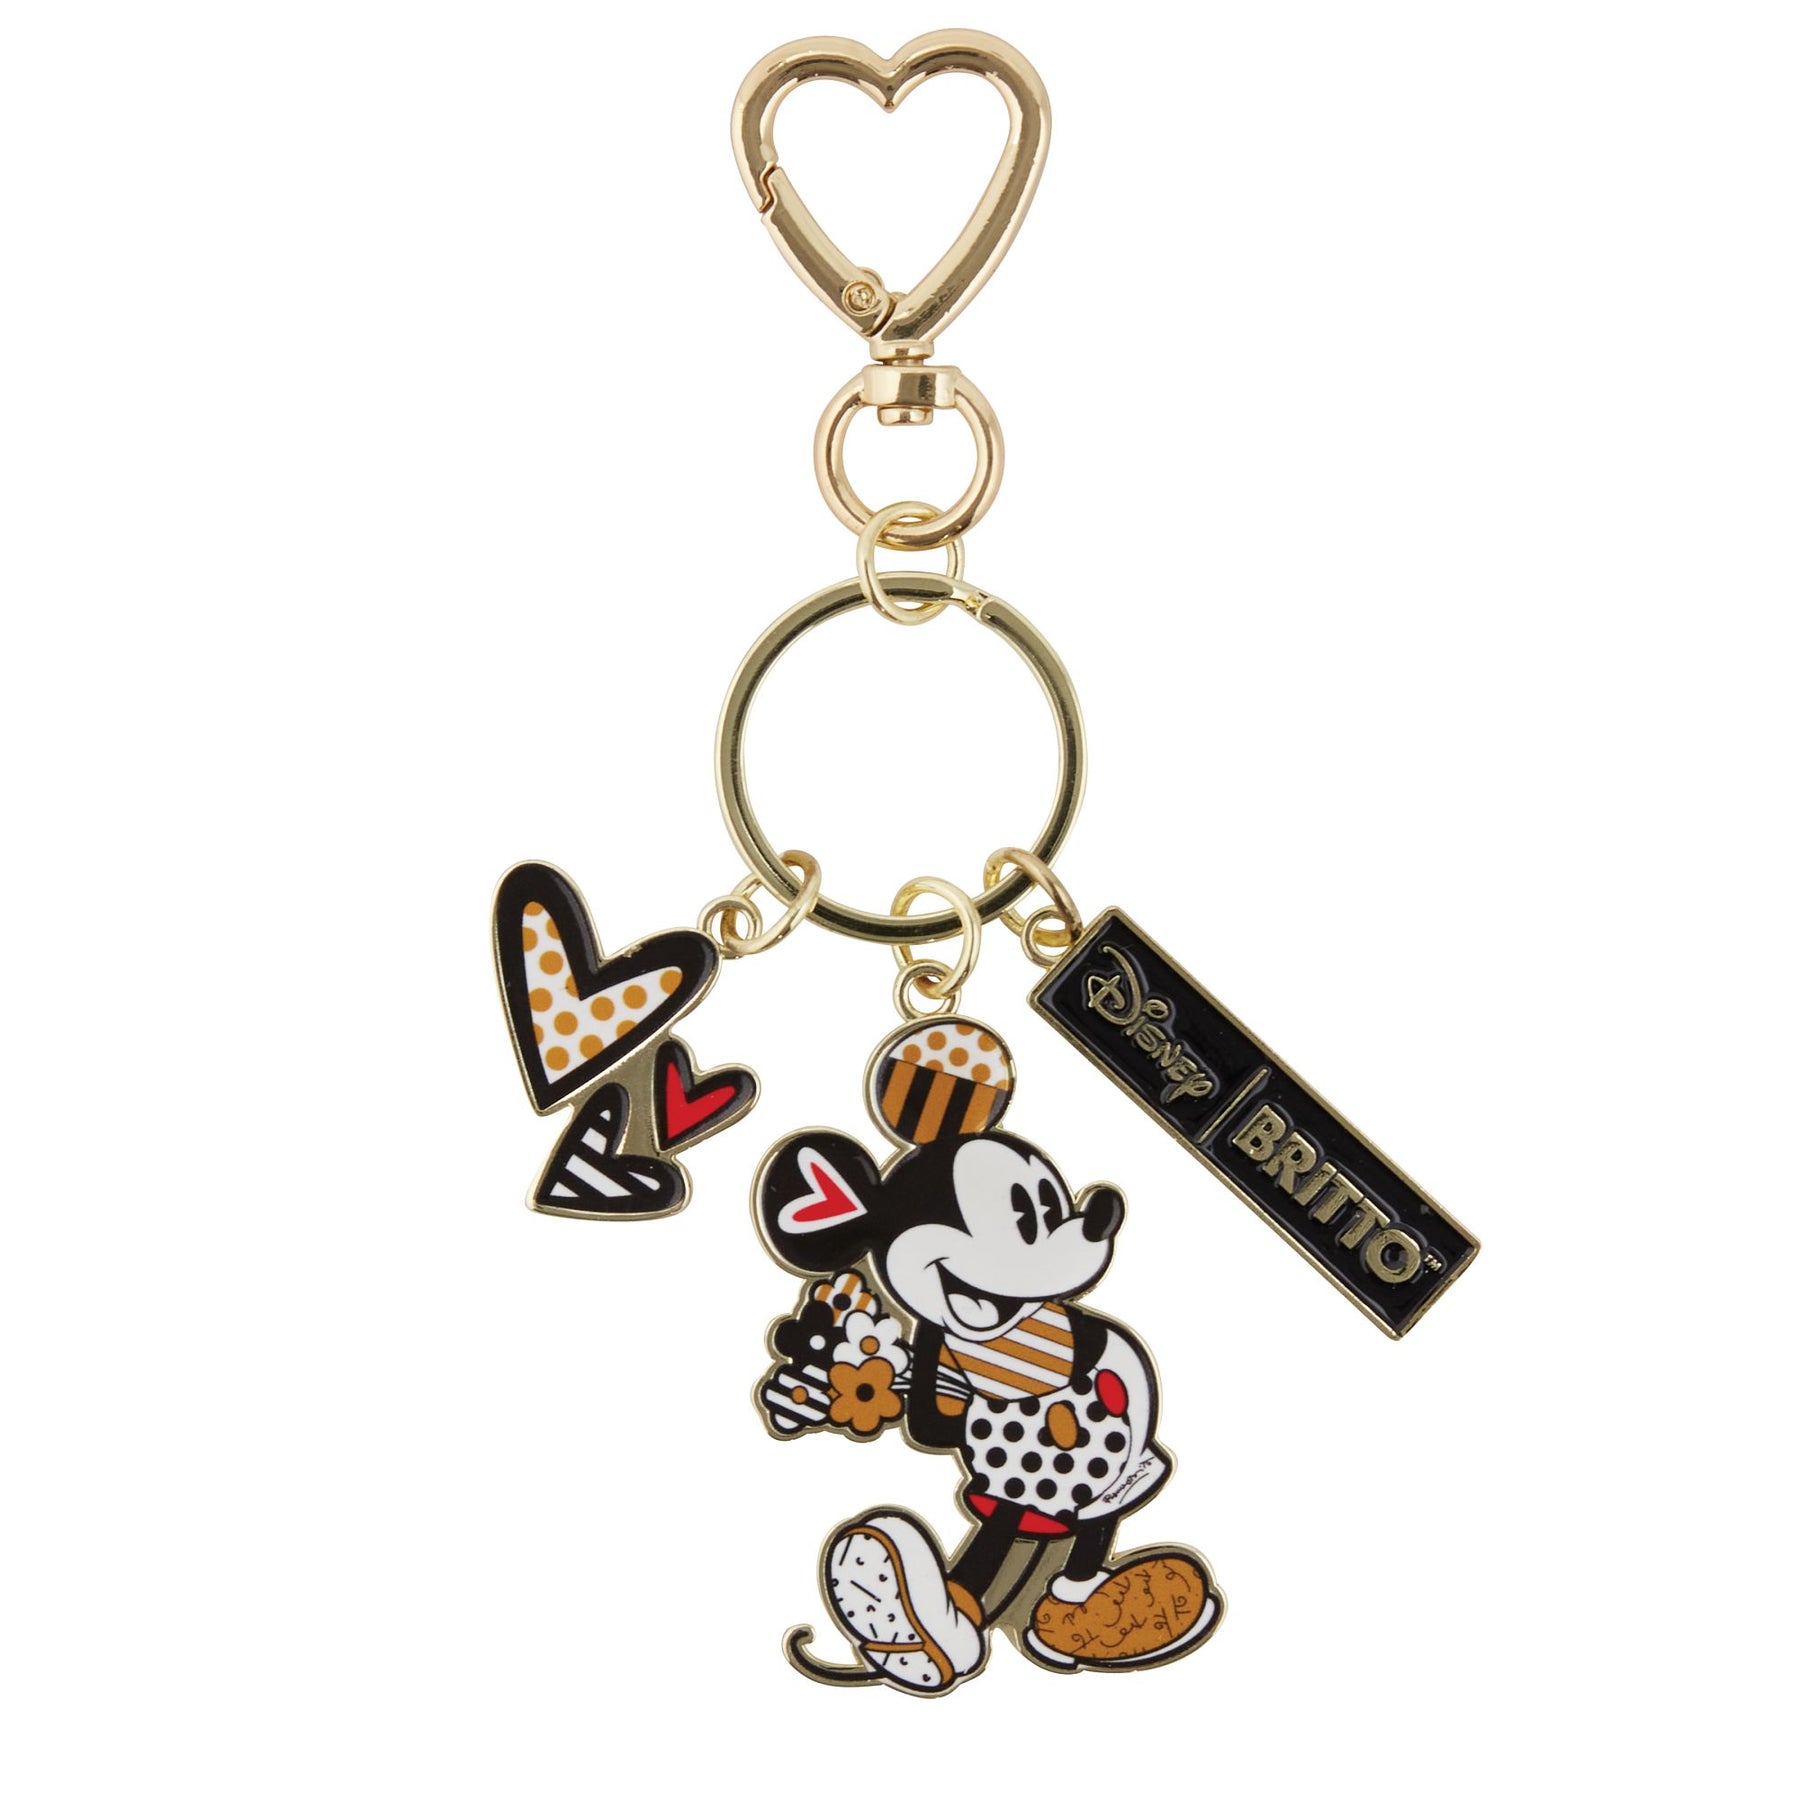 Enesco Disney Britto Midas Mickey Mouse Key Chain